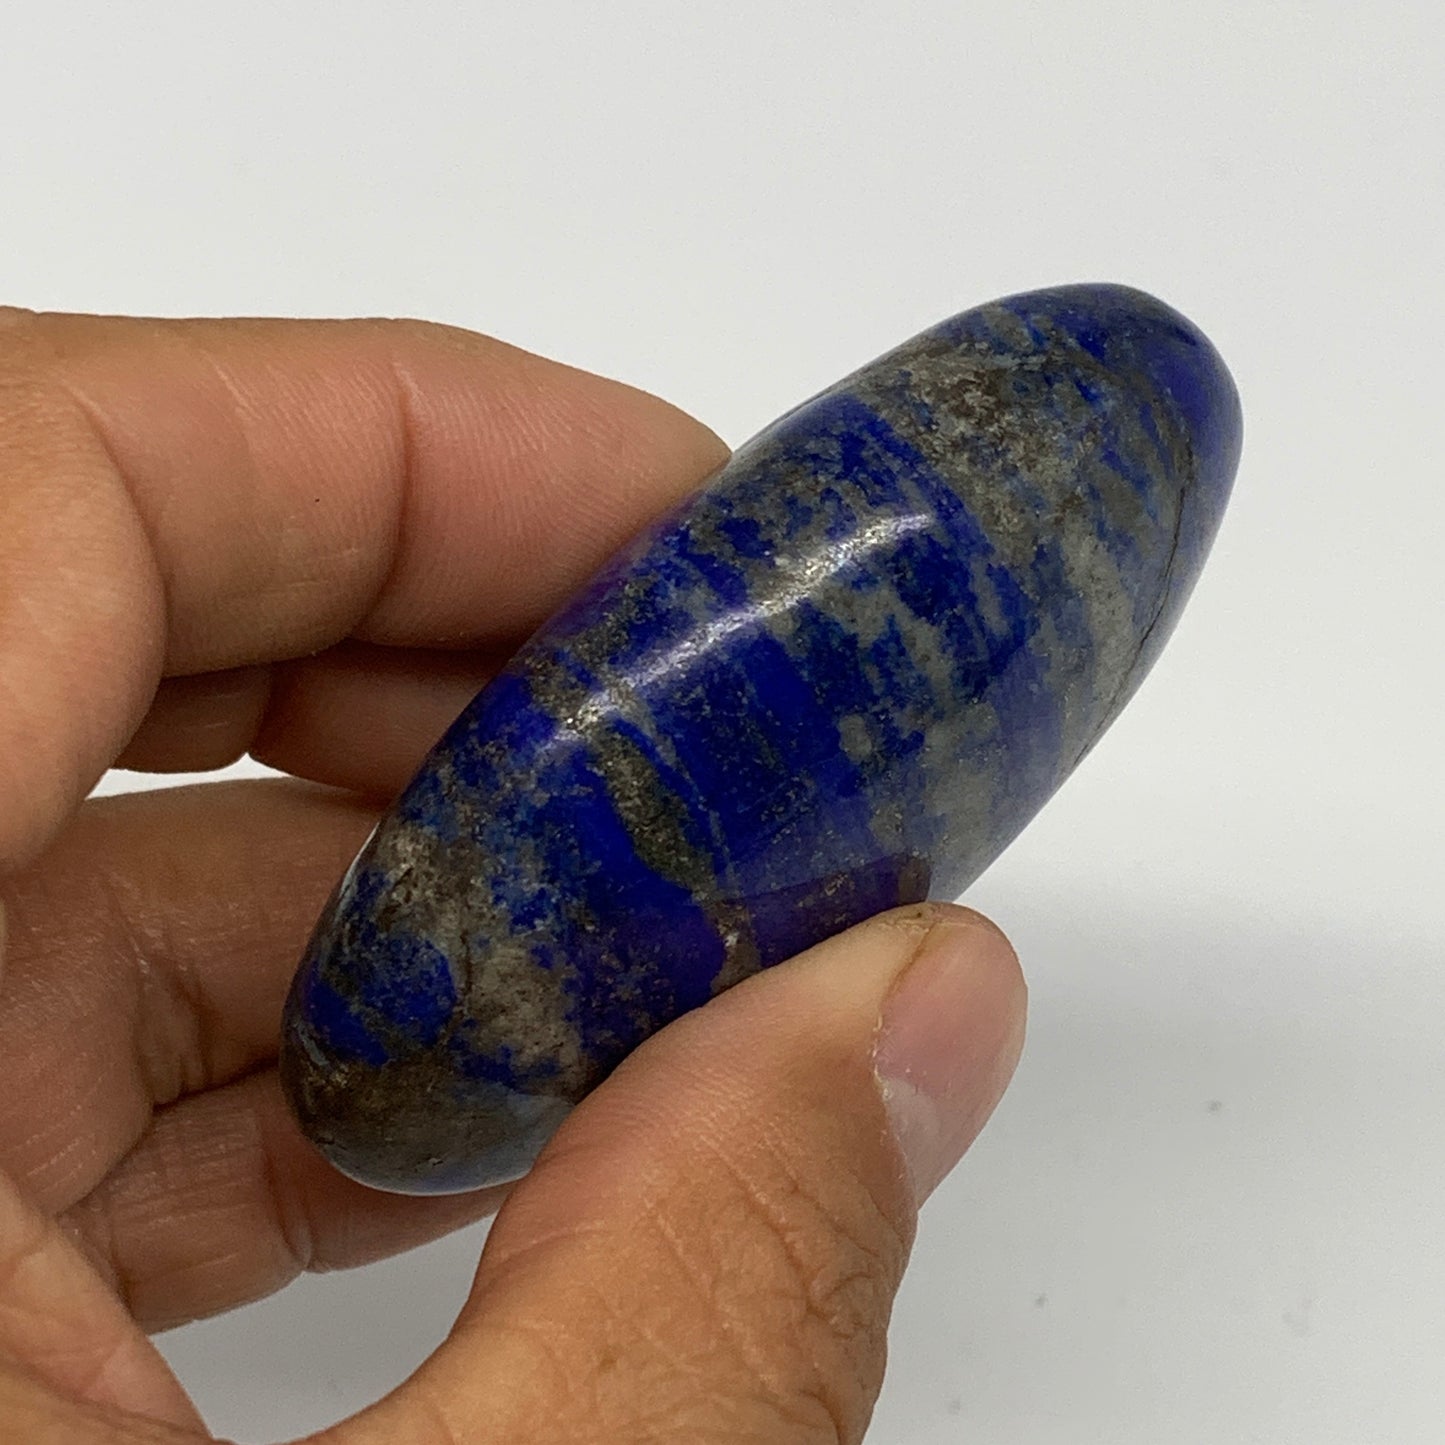 85g,2.5"x1.5"x0.8", Natural Lapis Lazuli Palm Stone @Afghanistan, B26307